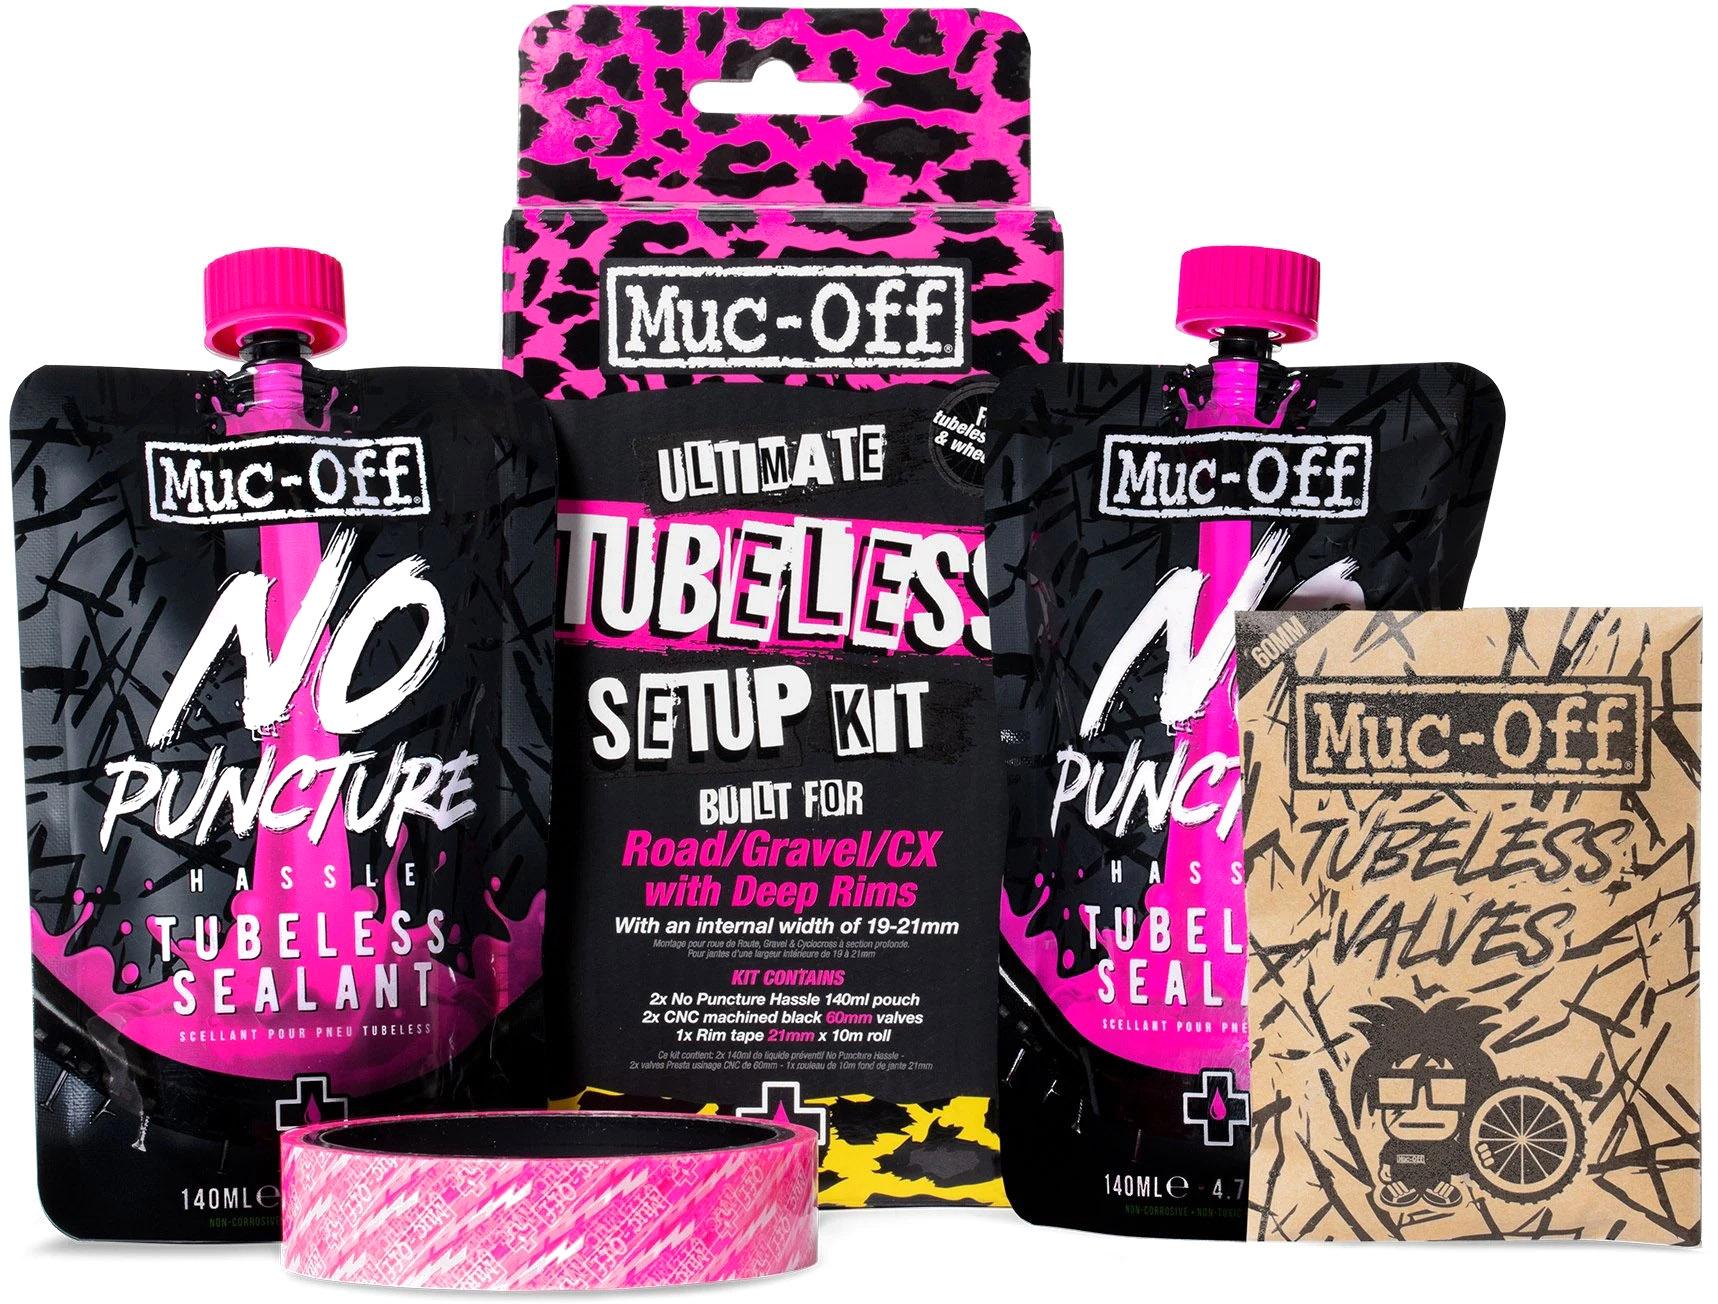 Muc-off Ultimate Tubeless Setup Kit 2021  Black/pink